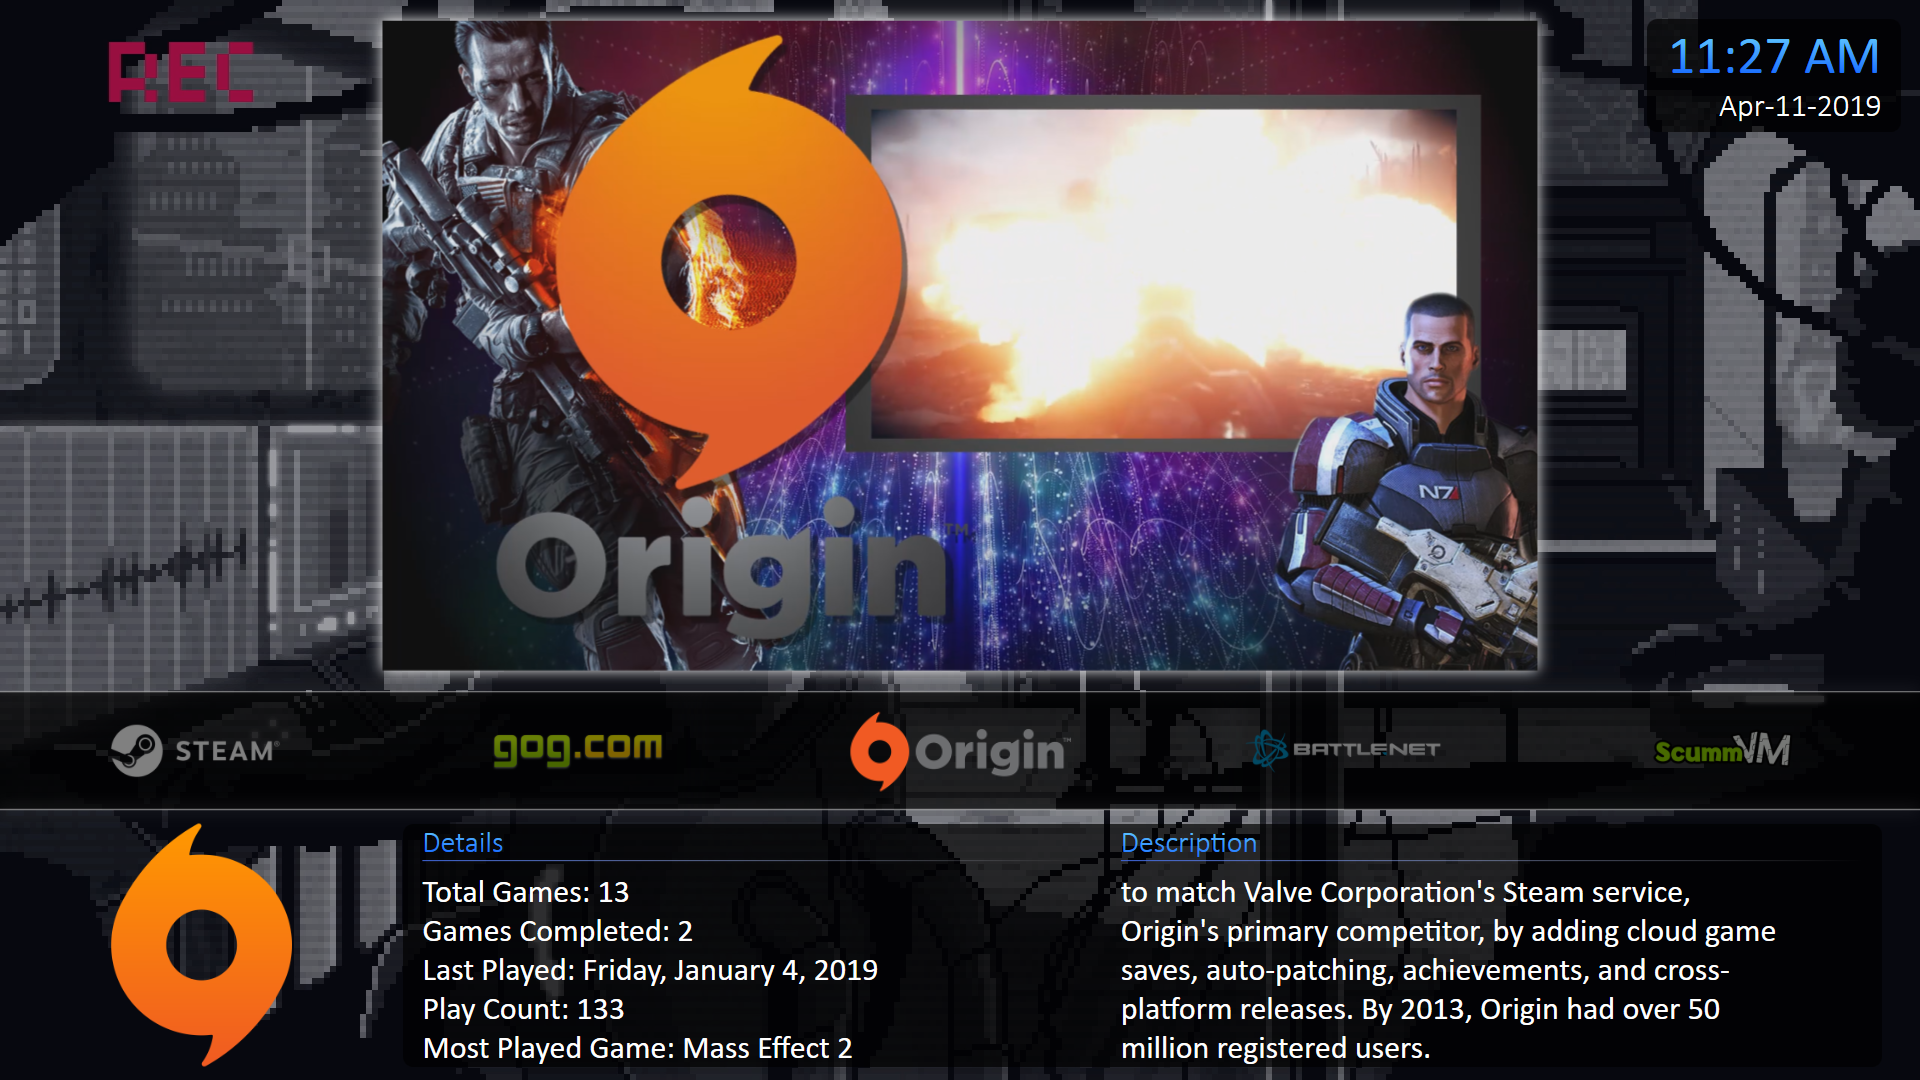 More information about "Origin Platform Theme Video"